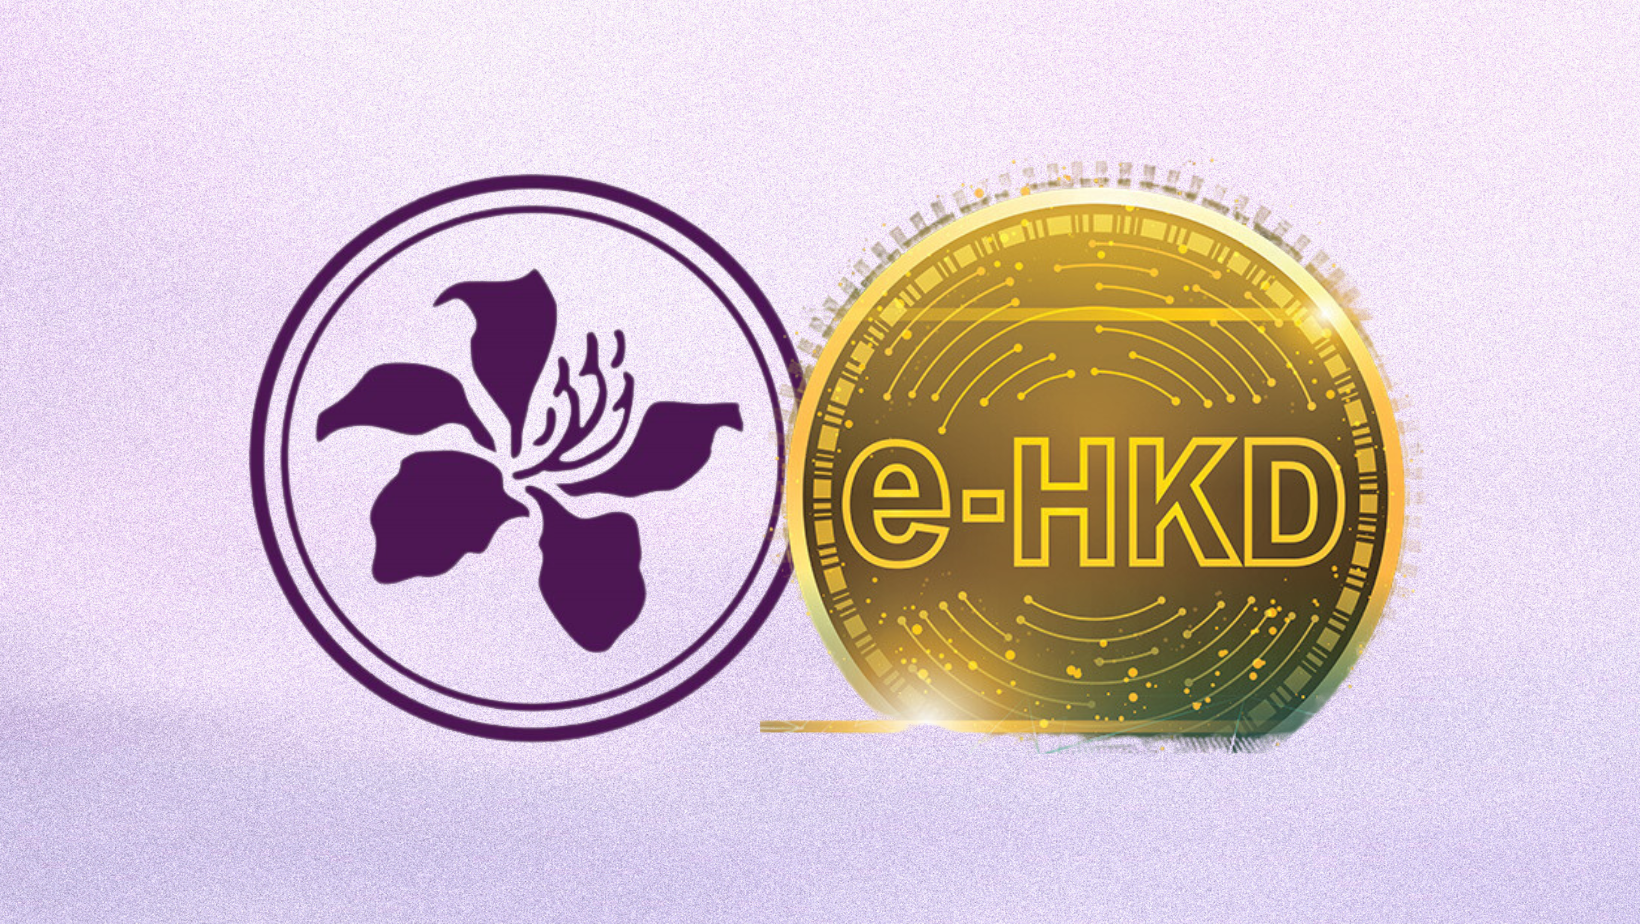 Hong Kong memajukan mata uang digital dengan uji coba e-HKD tahap kedua